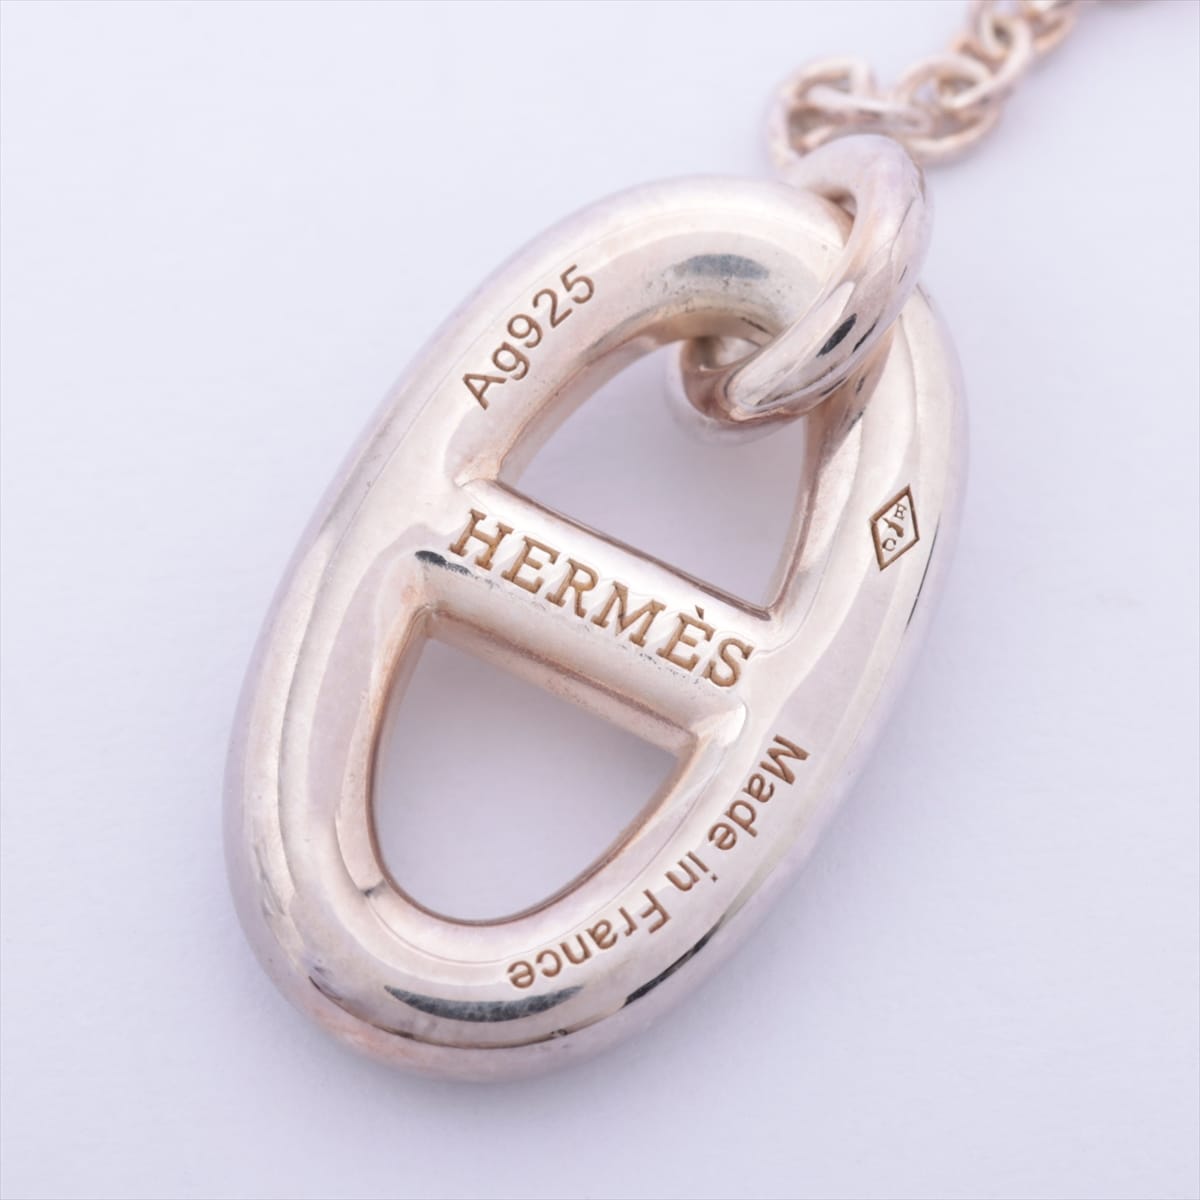 Hermès Chaîne d'Ancre Farandole Piercing jewelry (for both ears) 925 6.6g Silver